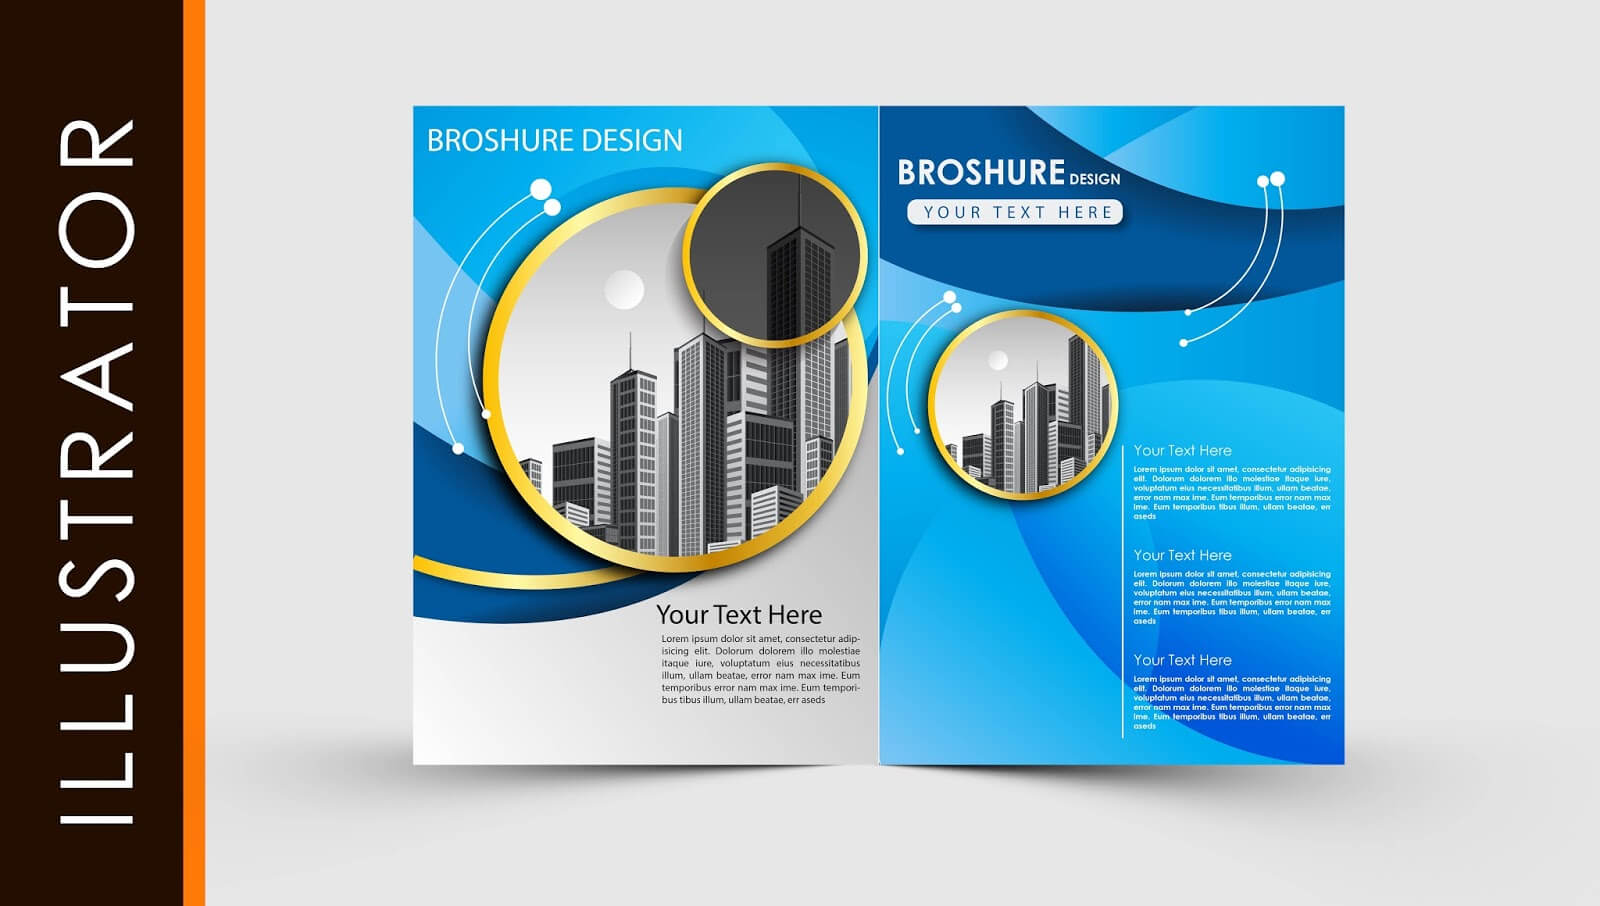 Free Download Adobe Illustrator Template Brochure Two Fold Regarding Brochure Templates Adobe Illustrator